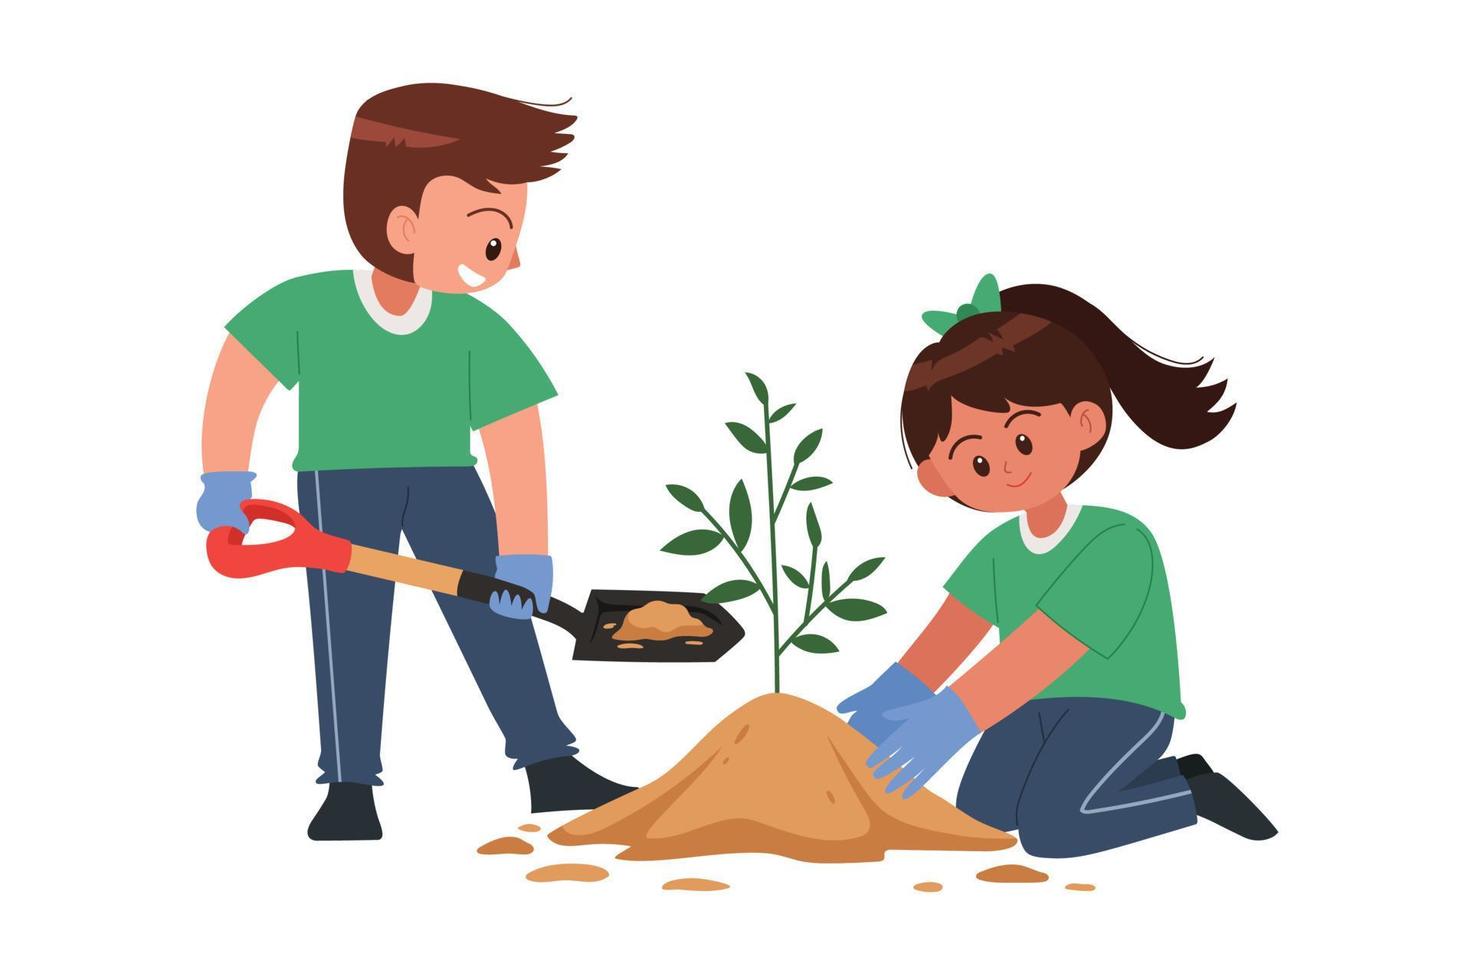 Children planting tree together cartoon vector